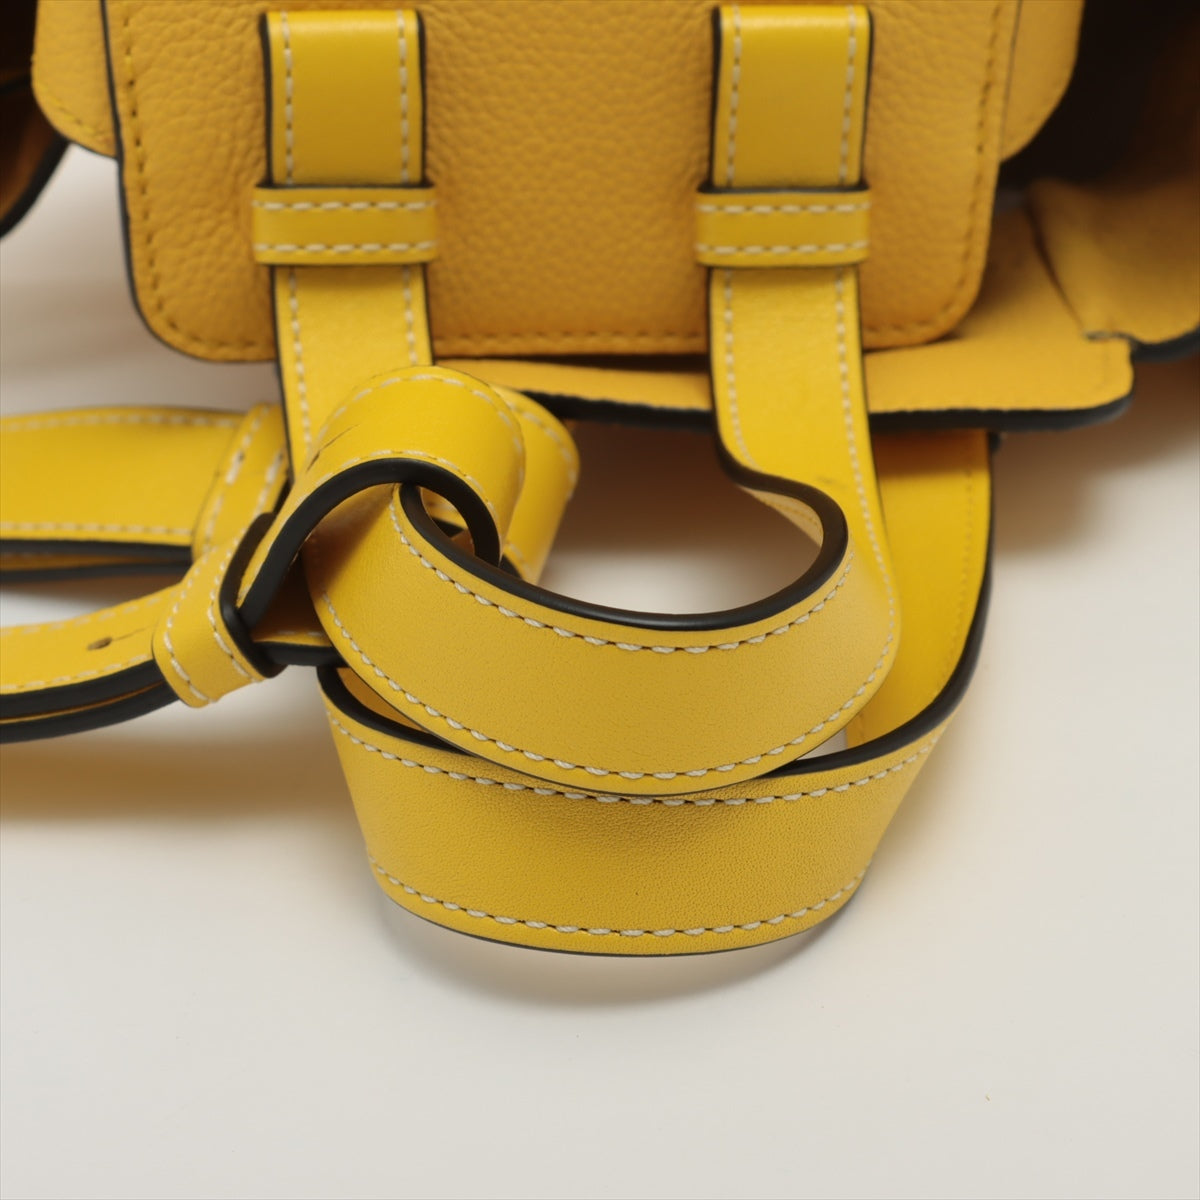 Loewe Hammock small Leather 2way handbag Yellow